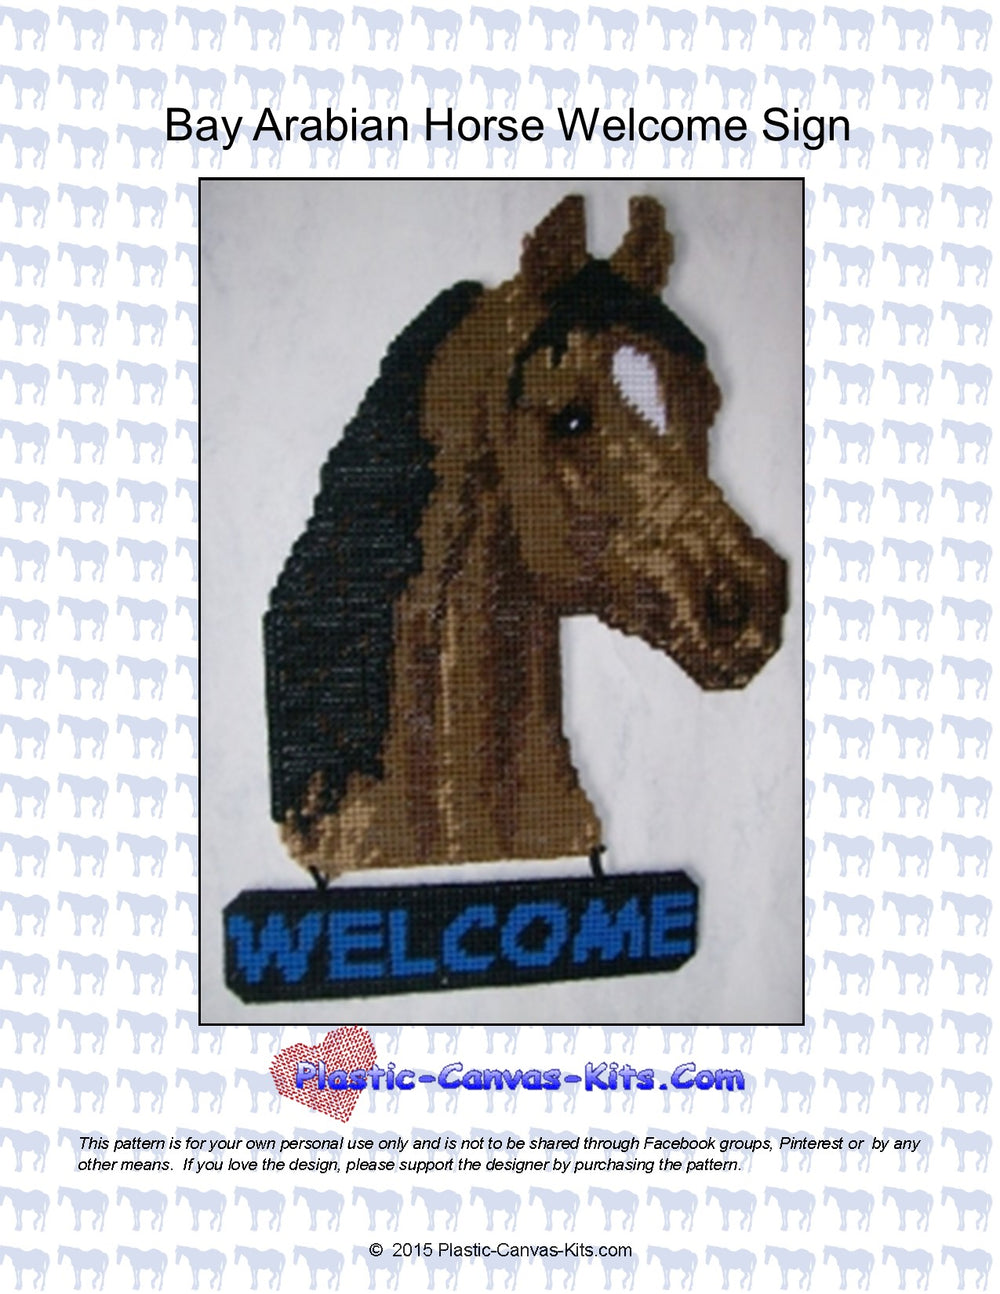 Bay Arabian Horse Welcome Sign